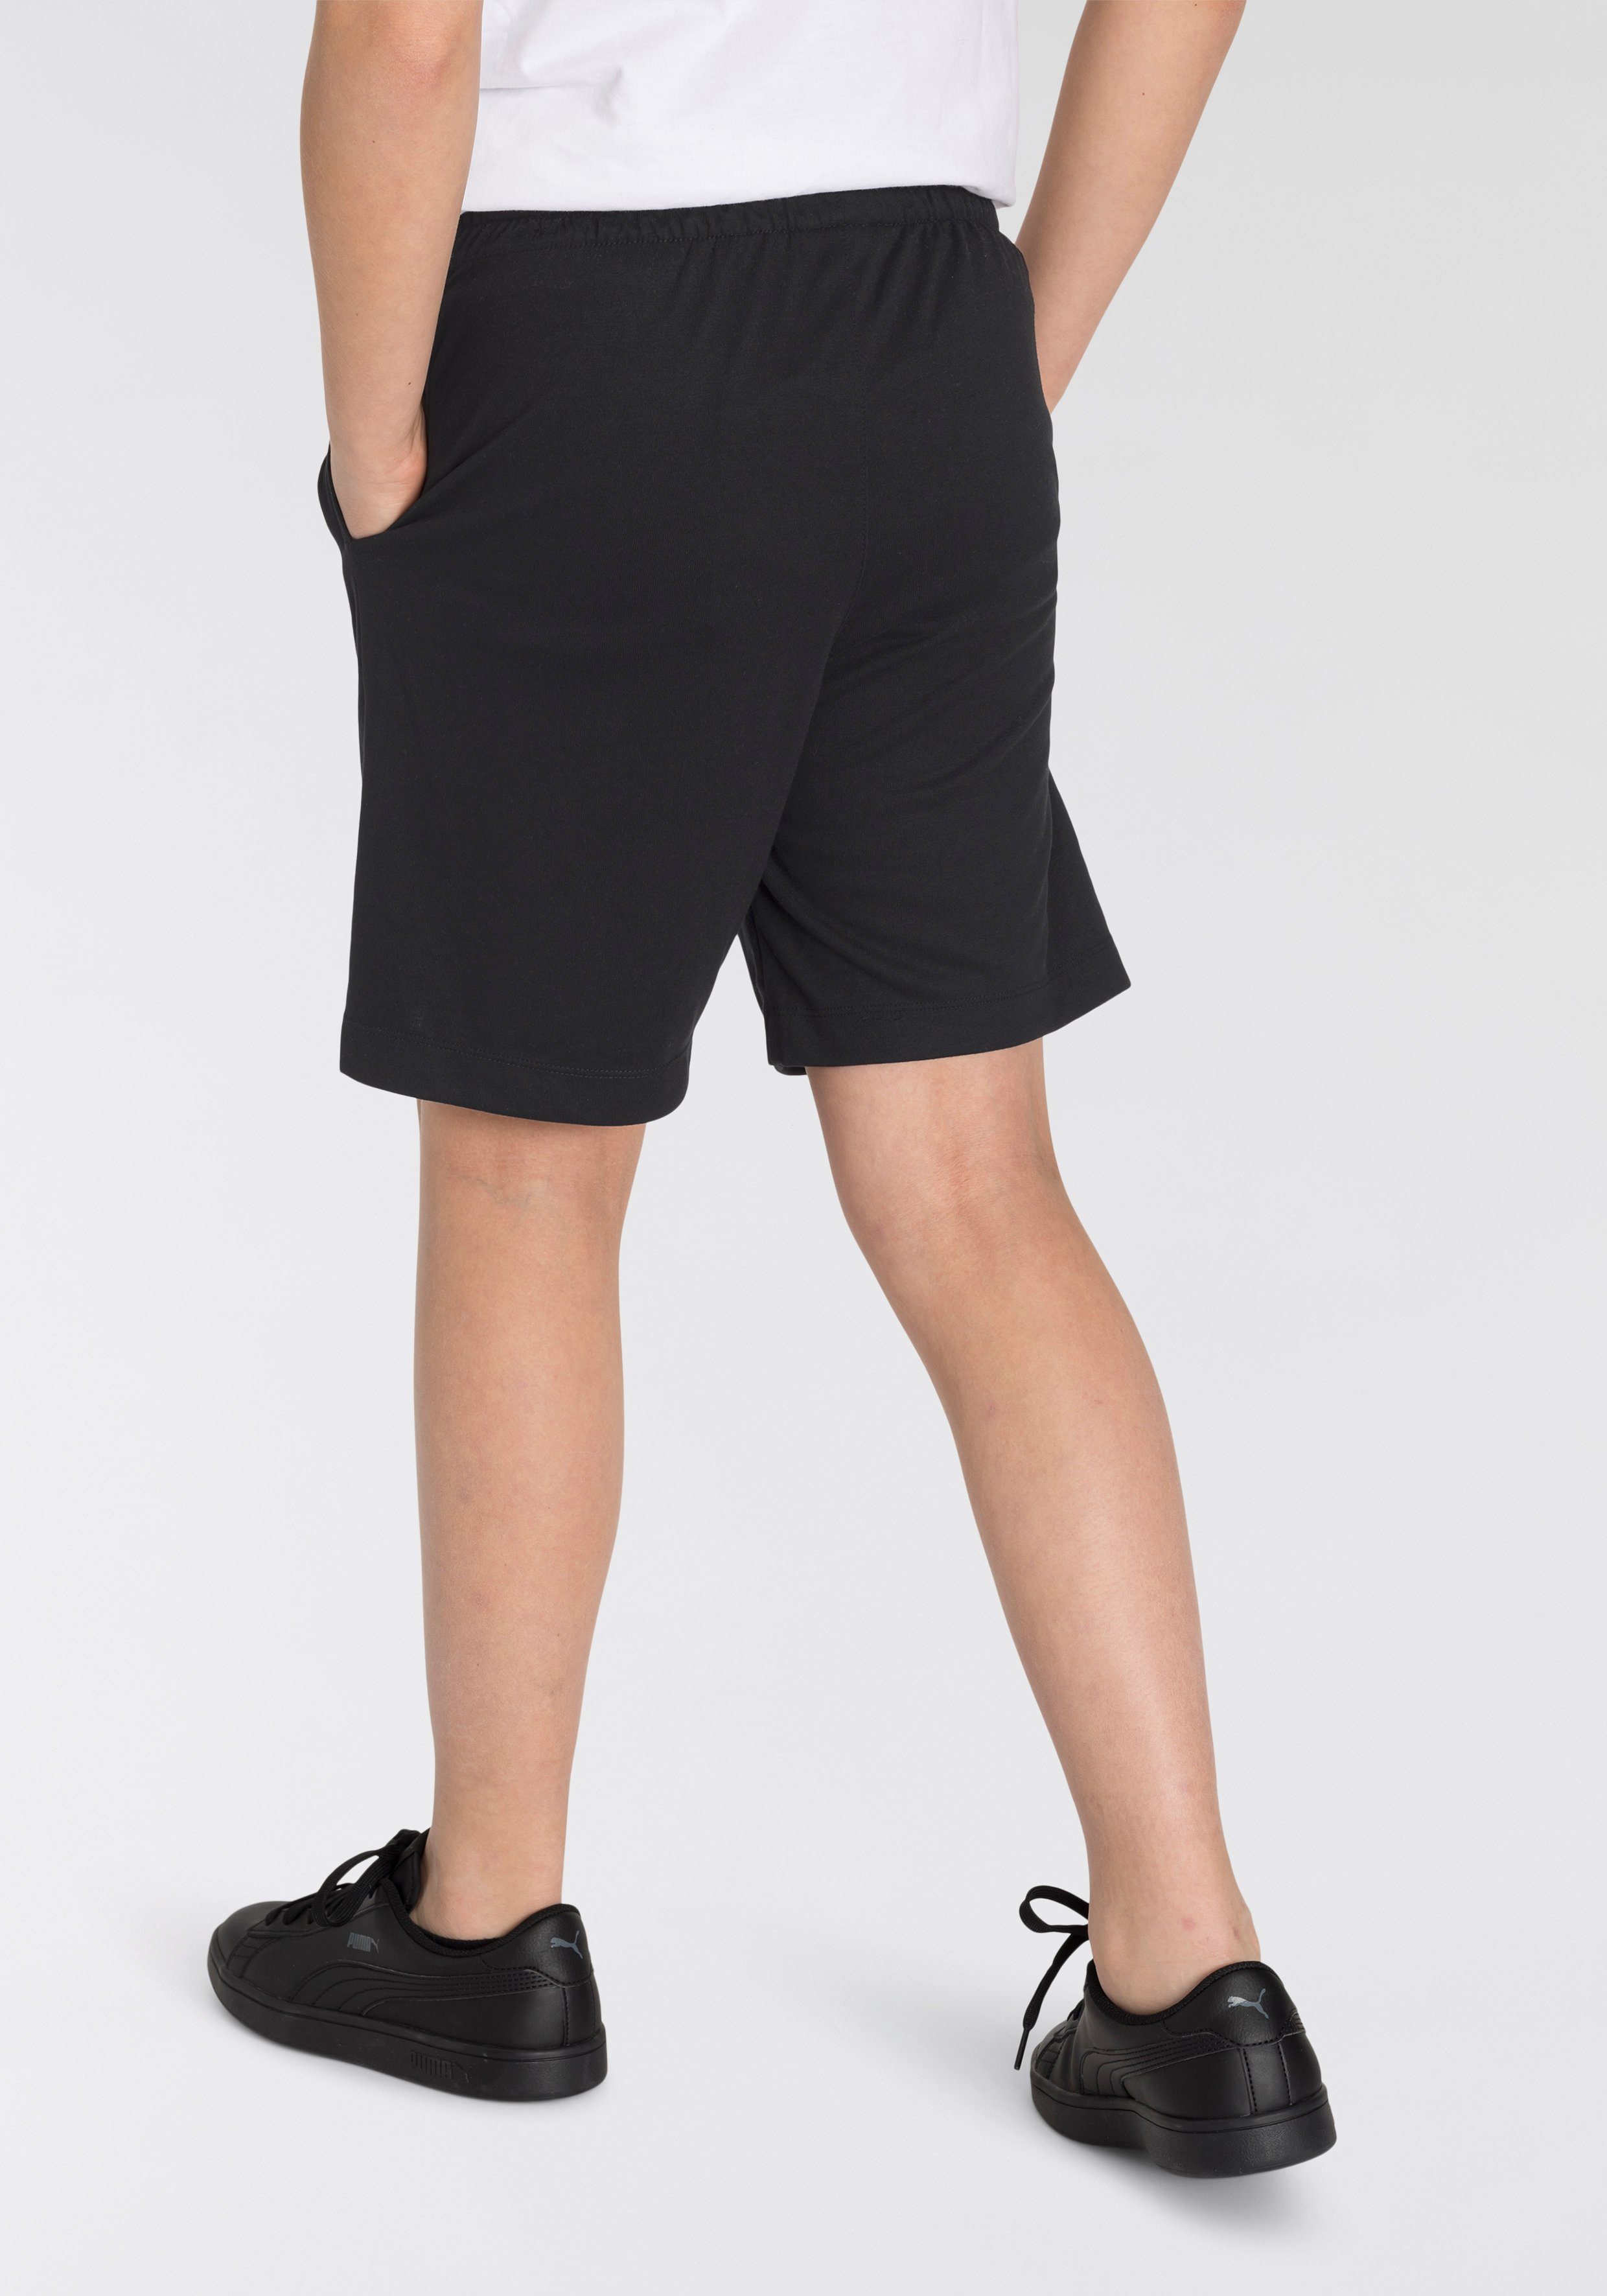 Shorts SHORTS JERSEY schwarz KIDS' Sportswear BIG Nike (BOYS)